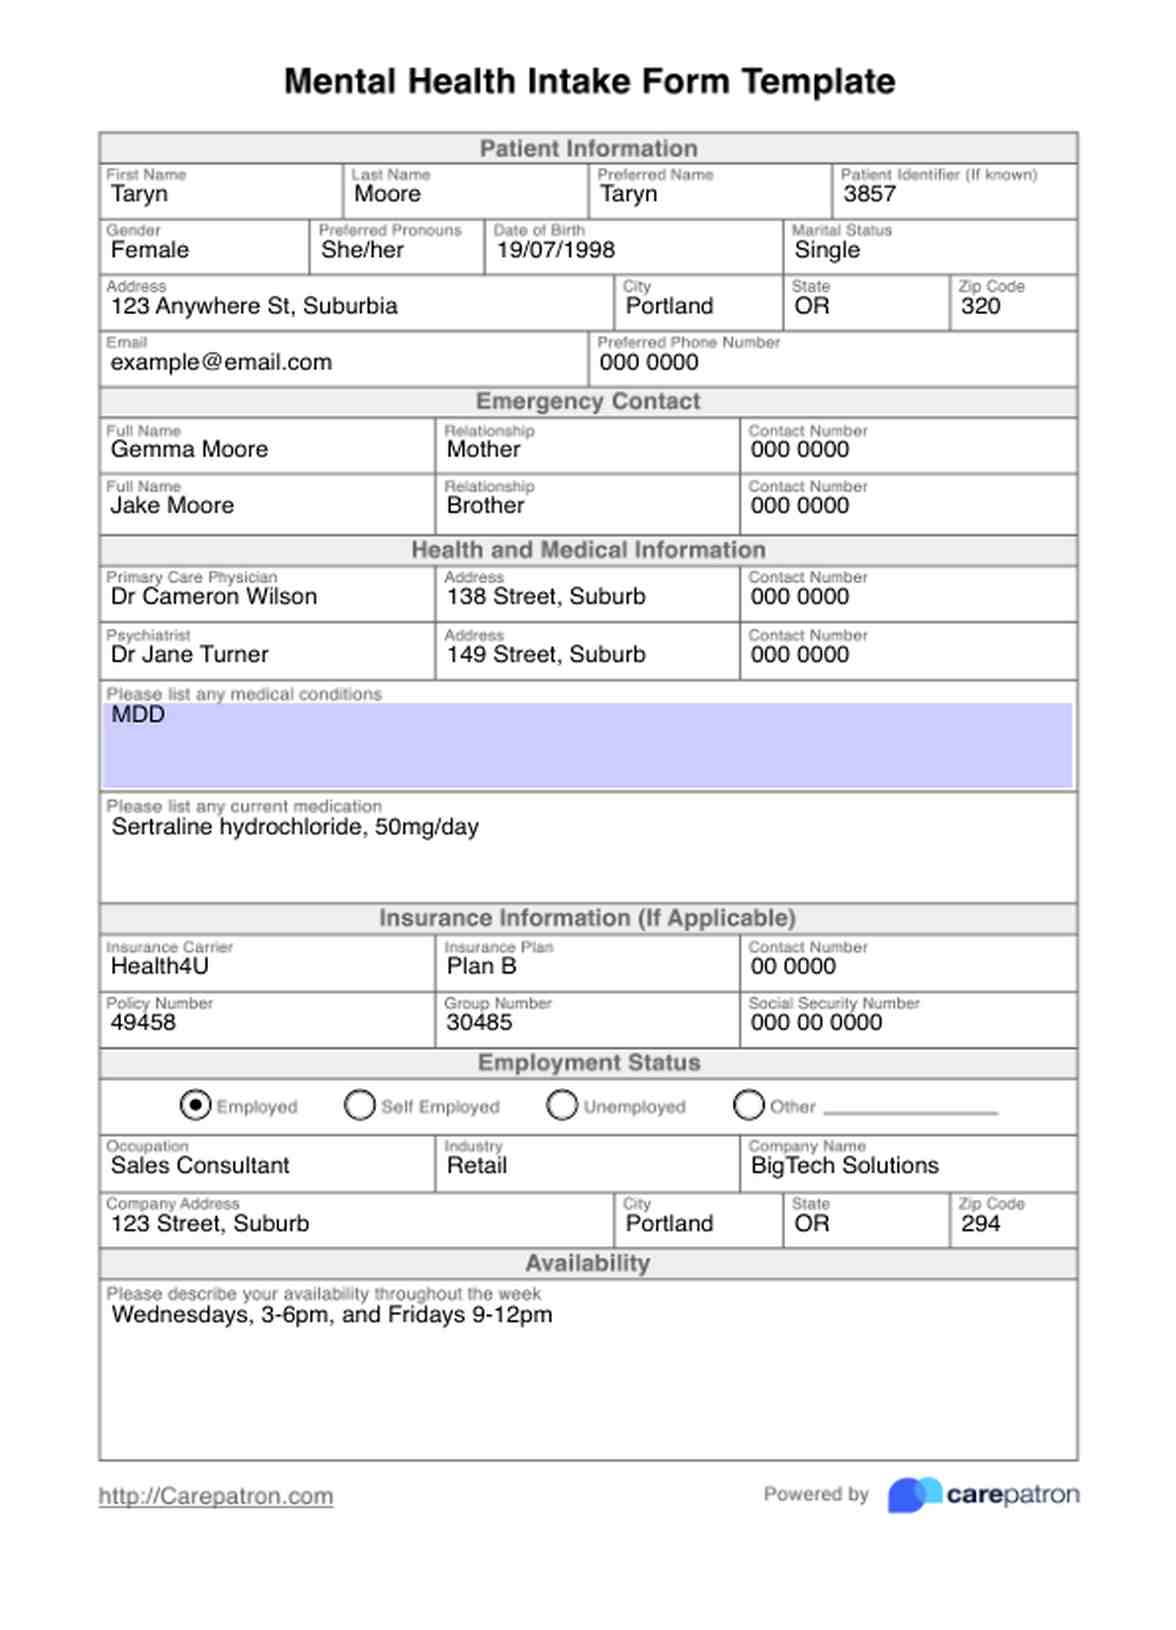 Mental Health Intake Form PDF Example